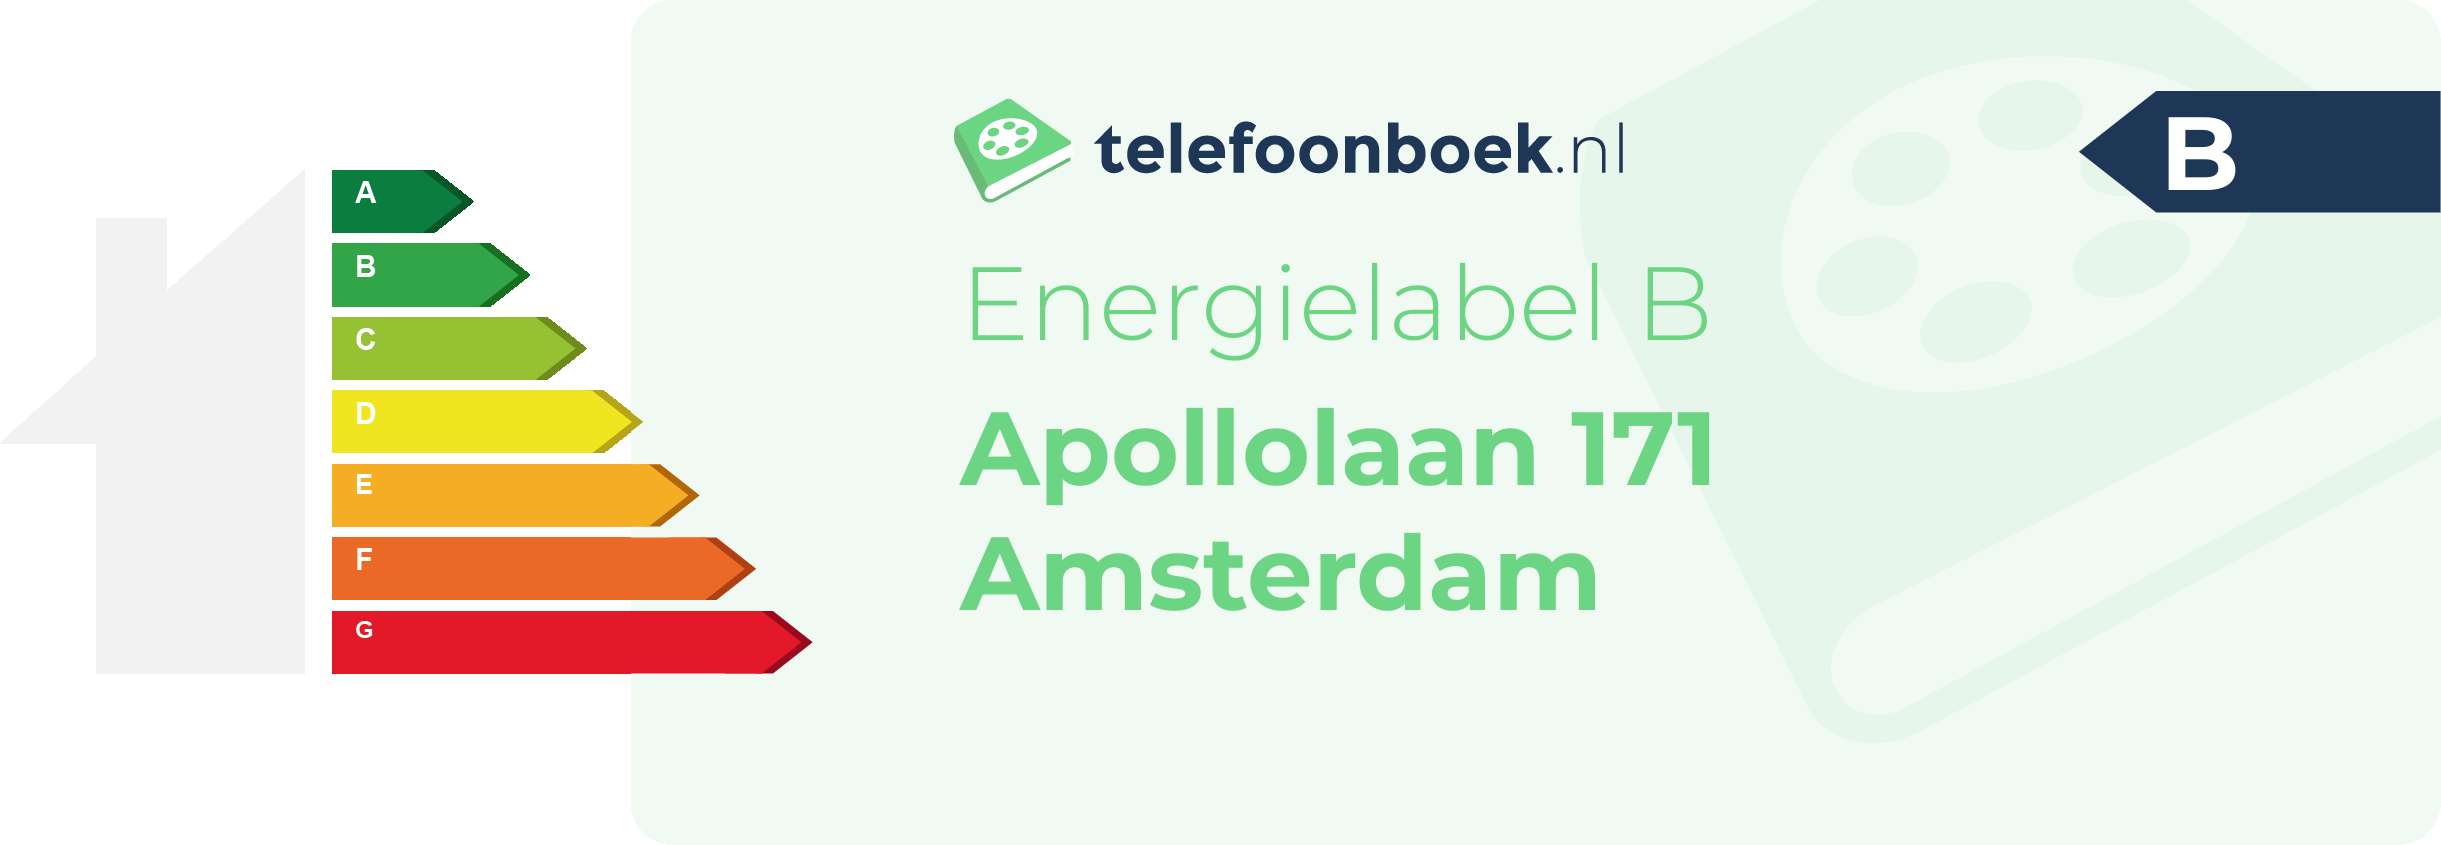 Energielabel Apollolaan 171 Amsterdam